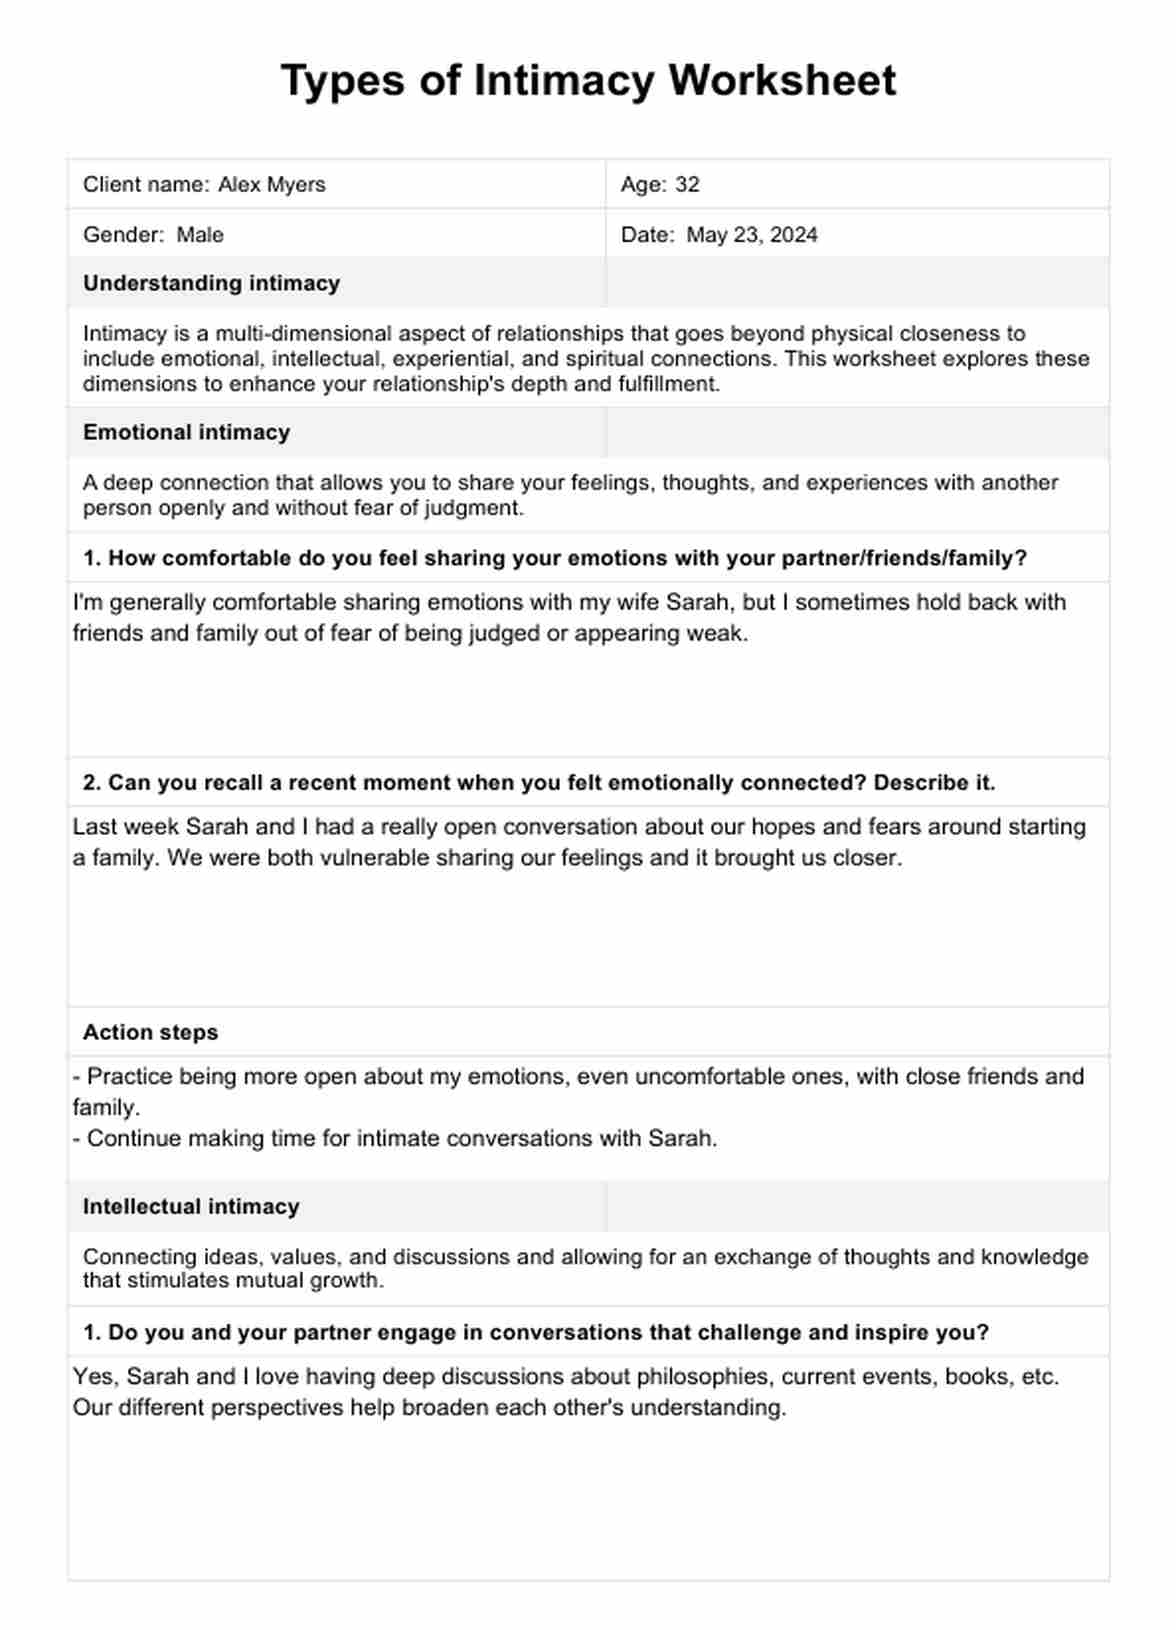 Types of Intimacy Worksheet PDF Example